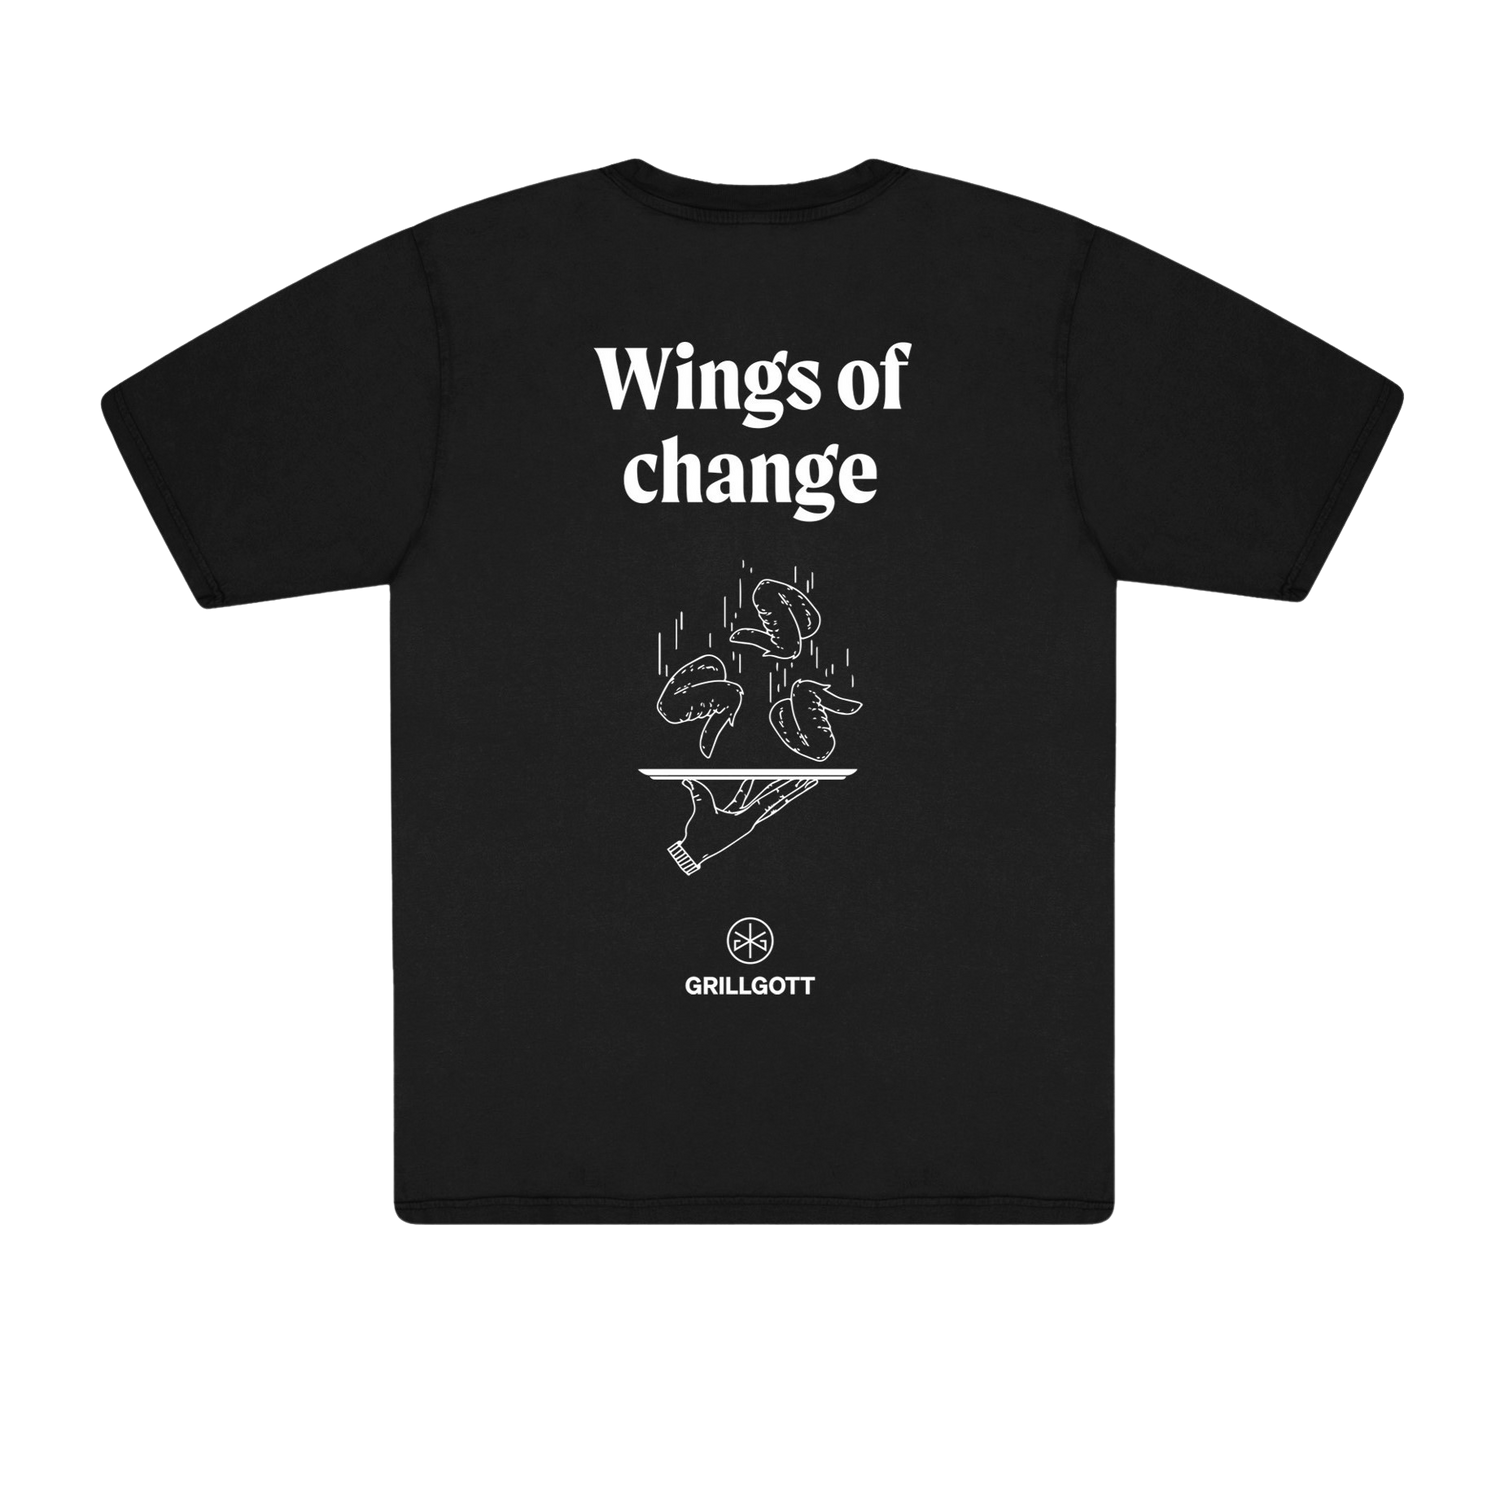 Grillgott T-Shirt XS "Wings of change"